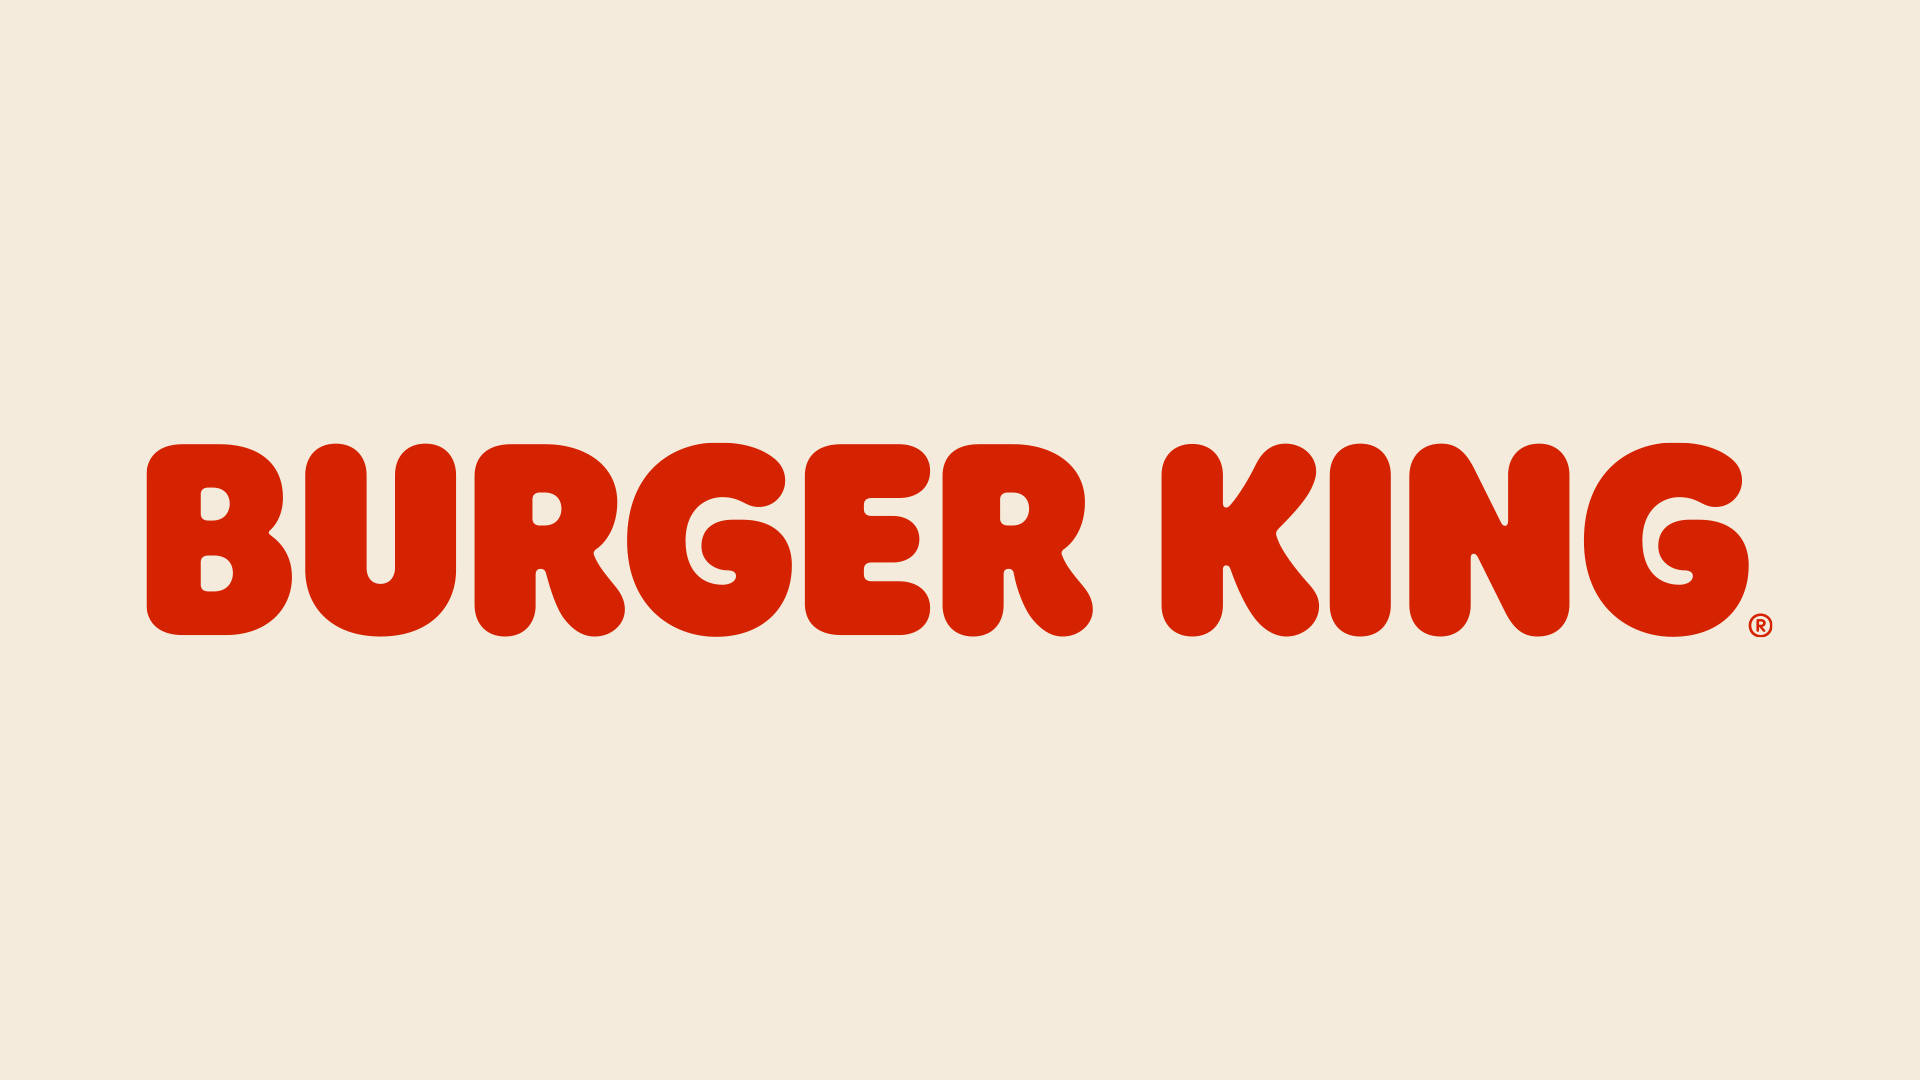 Burgerking Minimalist Word Mark: Burger King Minimalist Word Mark. Wallpaper